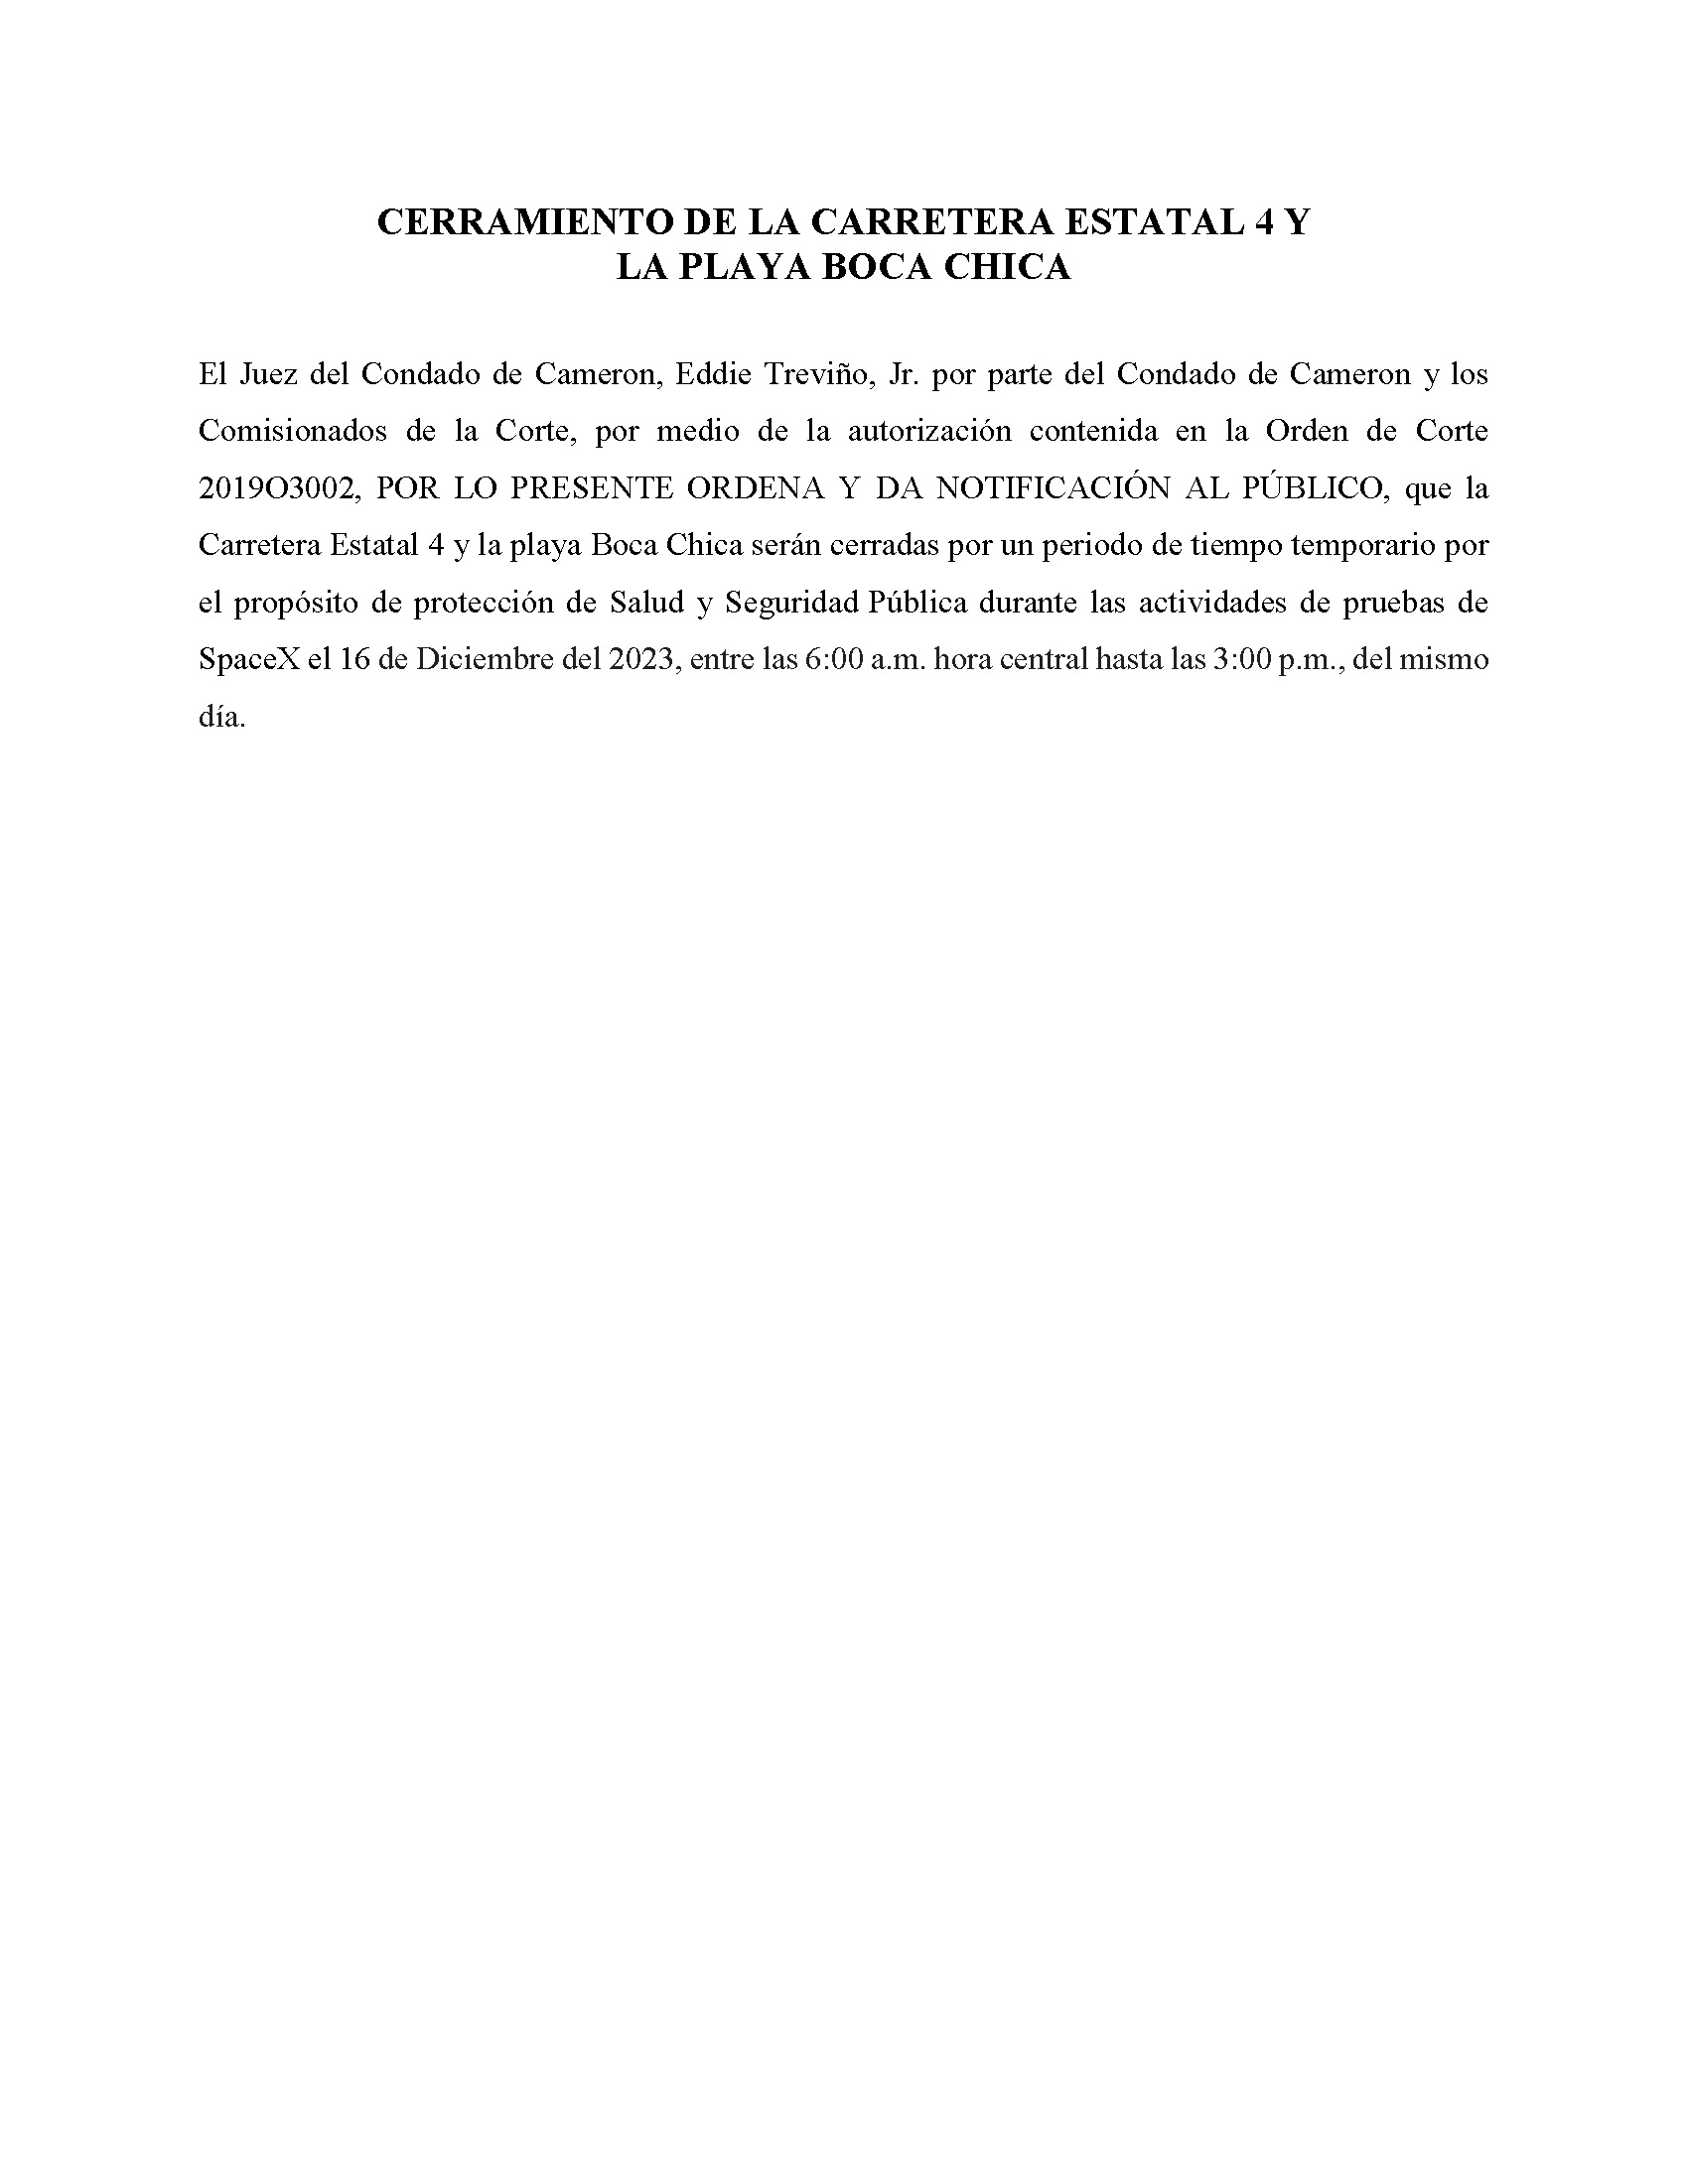 ORDER.CLOSURE OF HIGHWAY 4 Y LA PLAYA BOCA CHICA.SPANISH.12.16.23